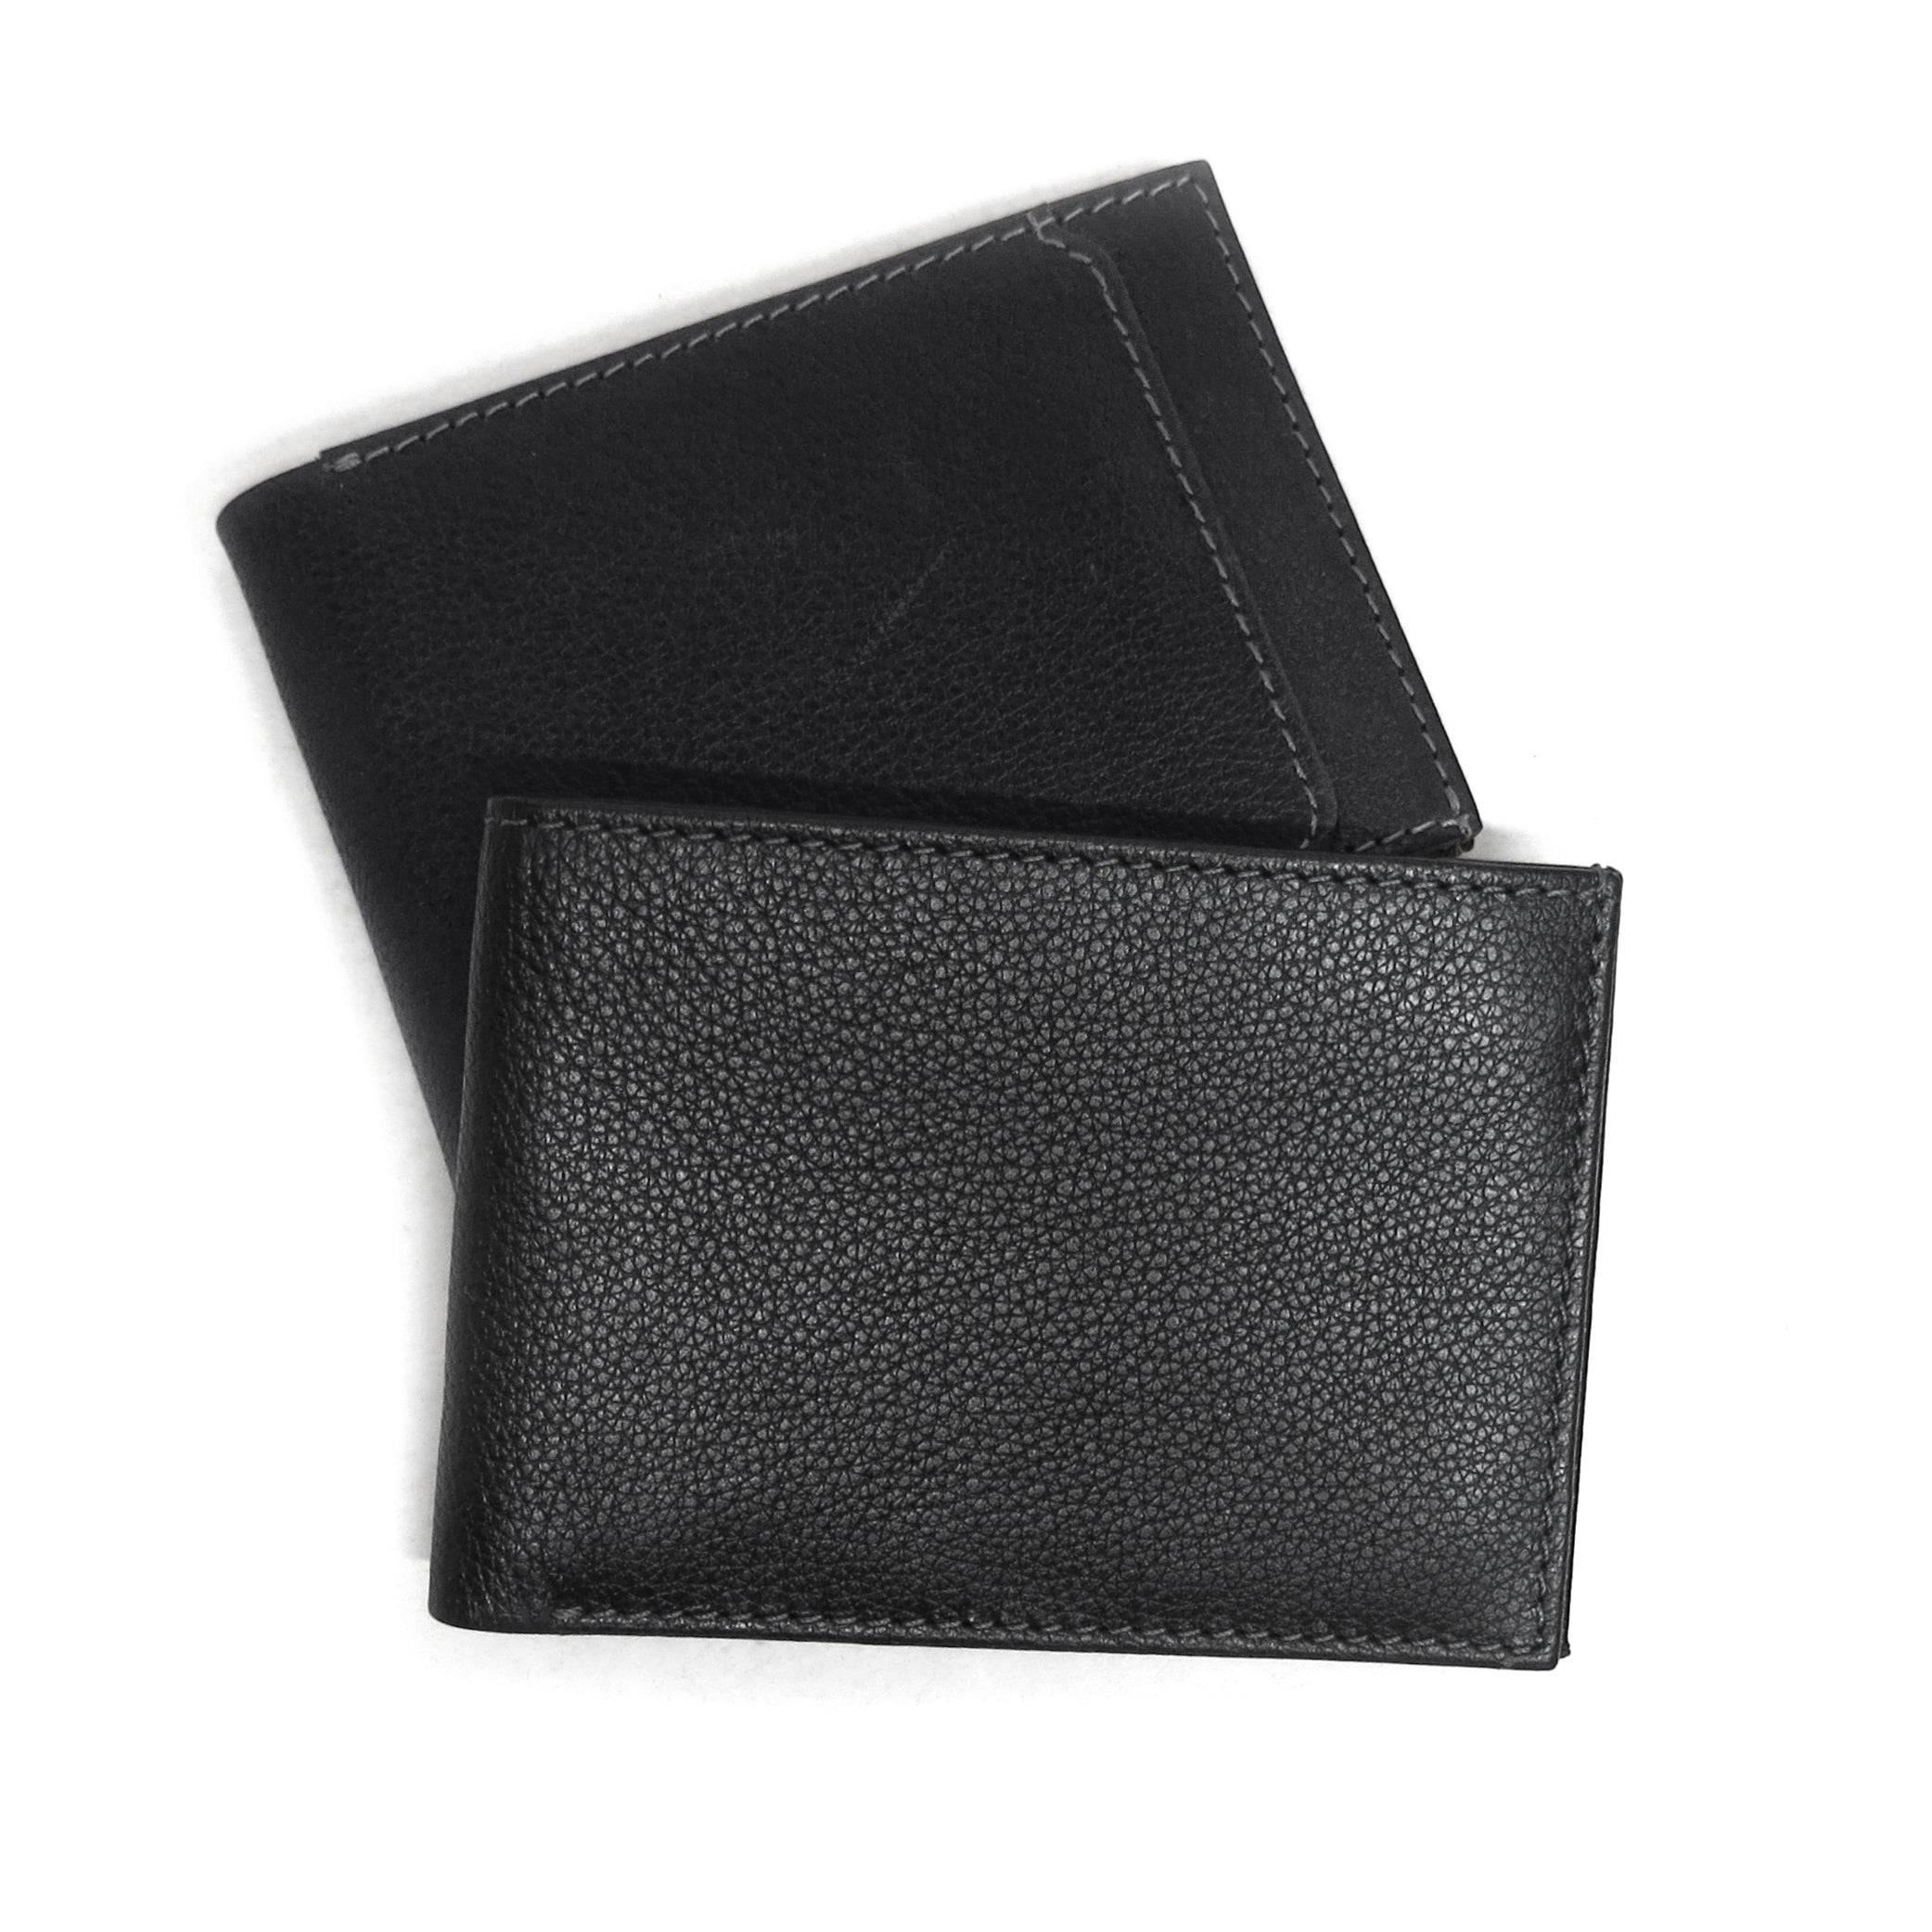 Garth Slimster Leather Wallet